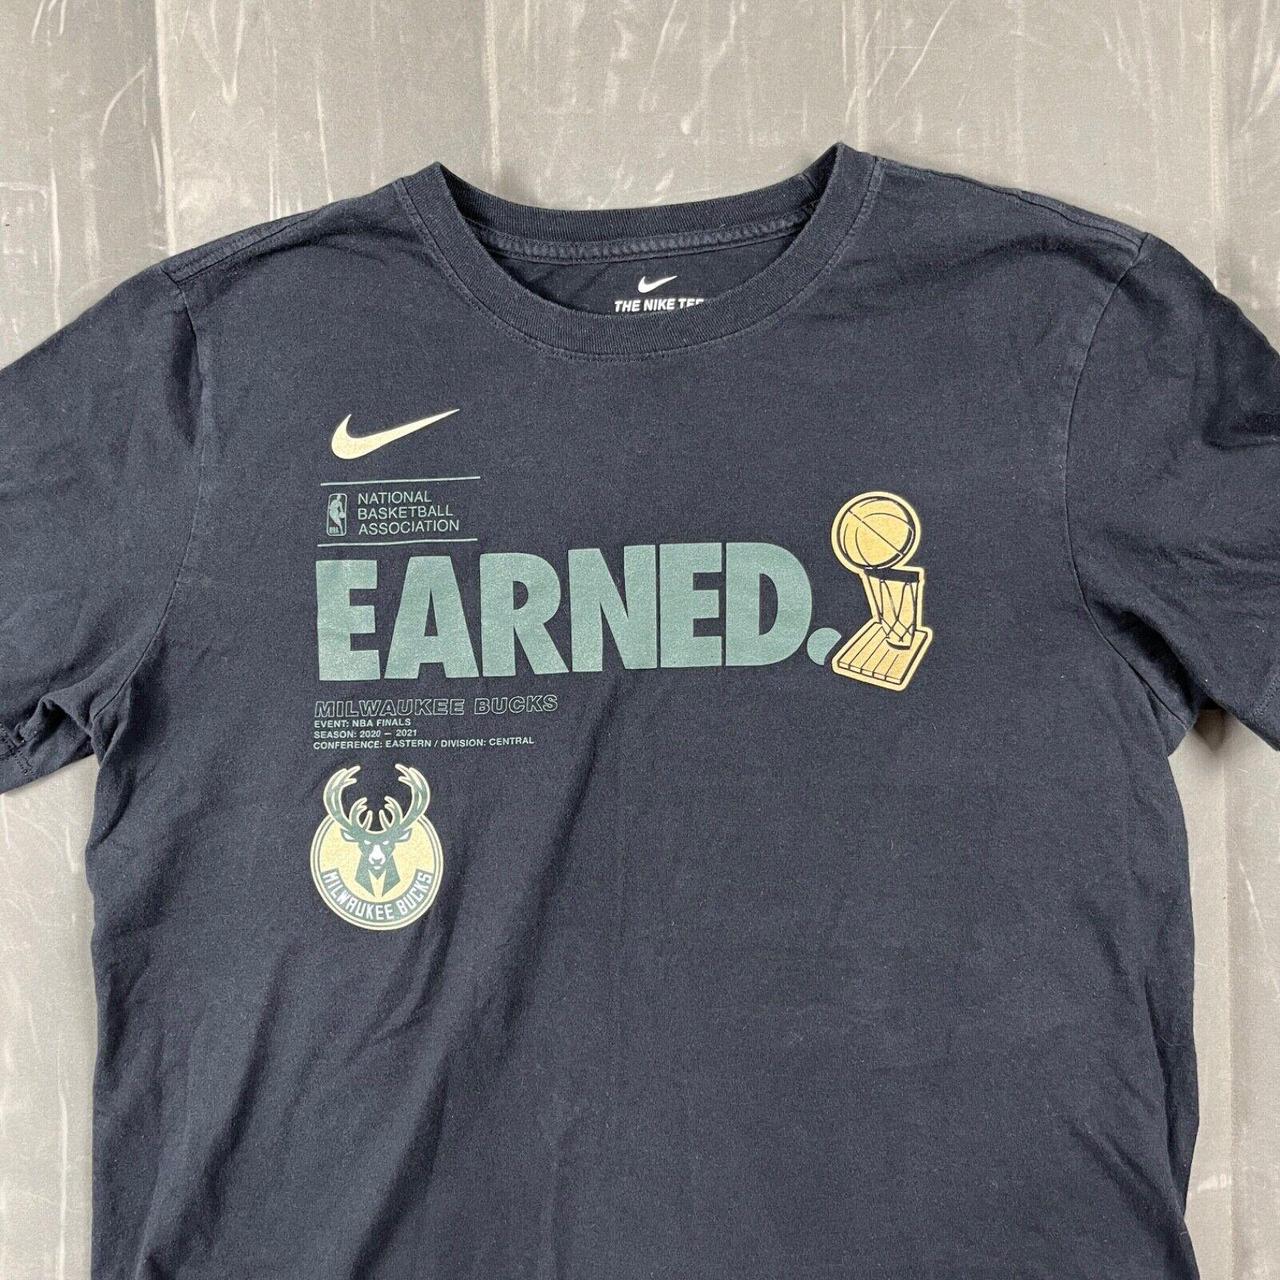 Milwaukee Bucks Men's Nike NBA T-Shirt